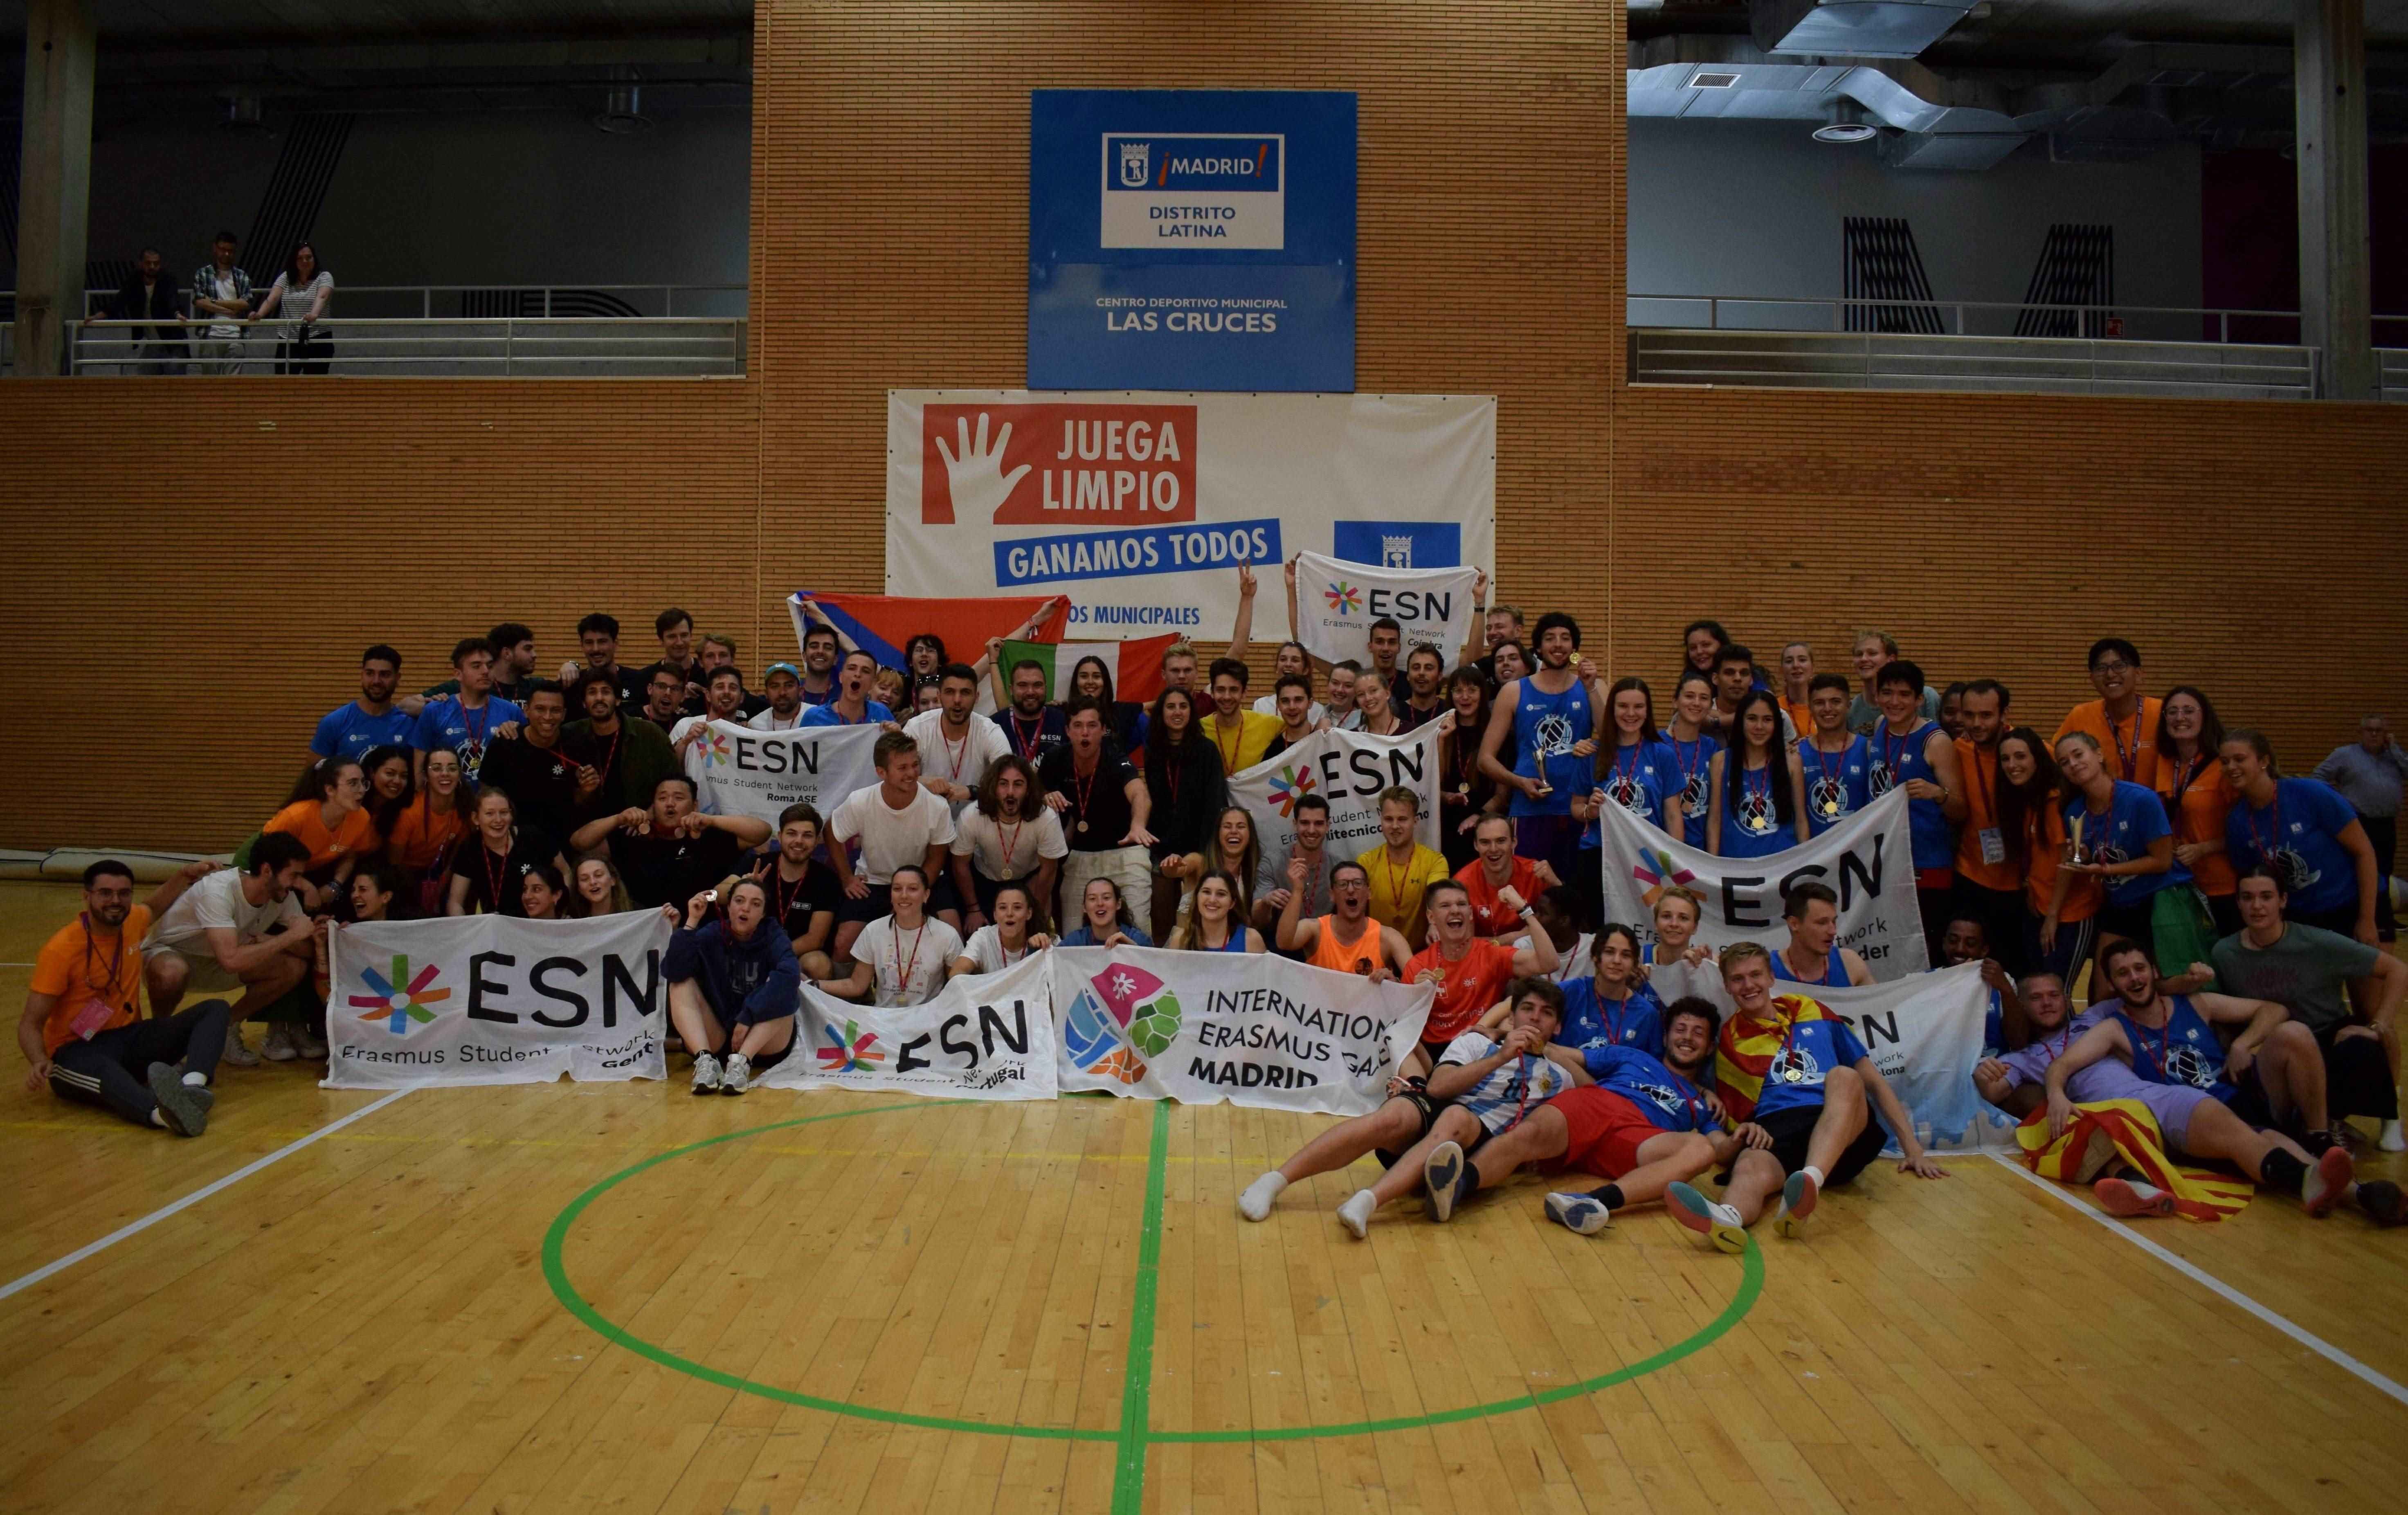 International Erasmus Games